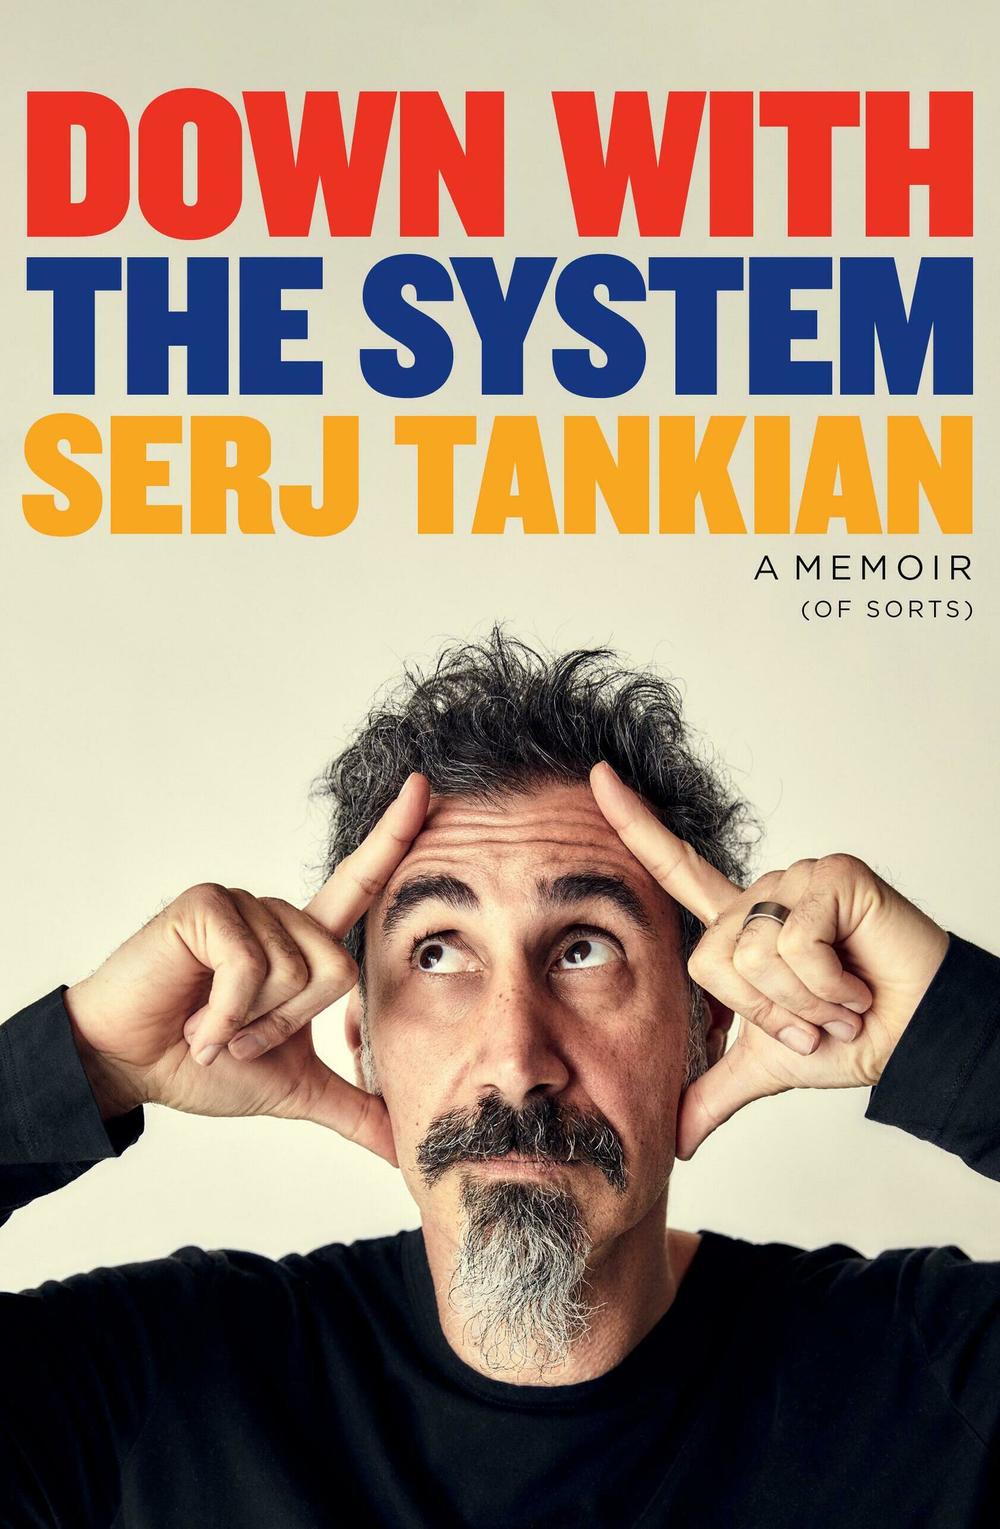 Cover art for Serj Tankian's 